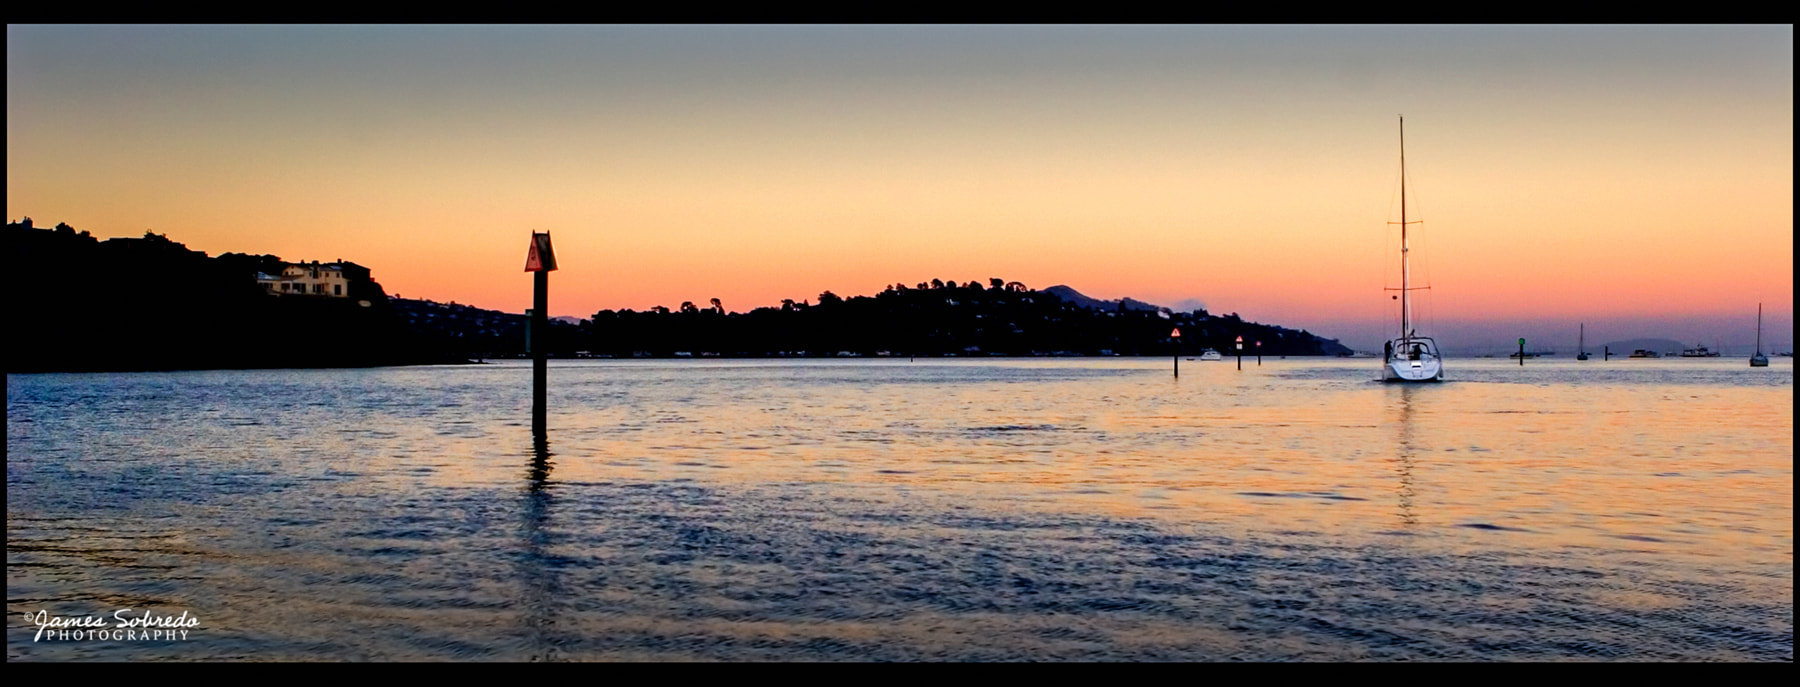 Photo: Sailboat & sunset, Sausalito. 